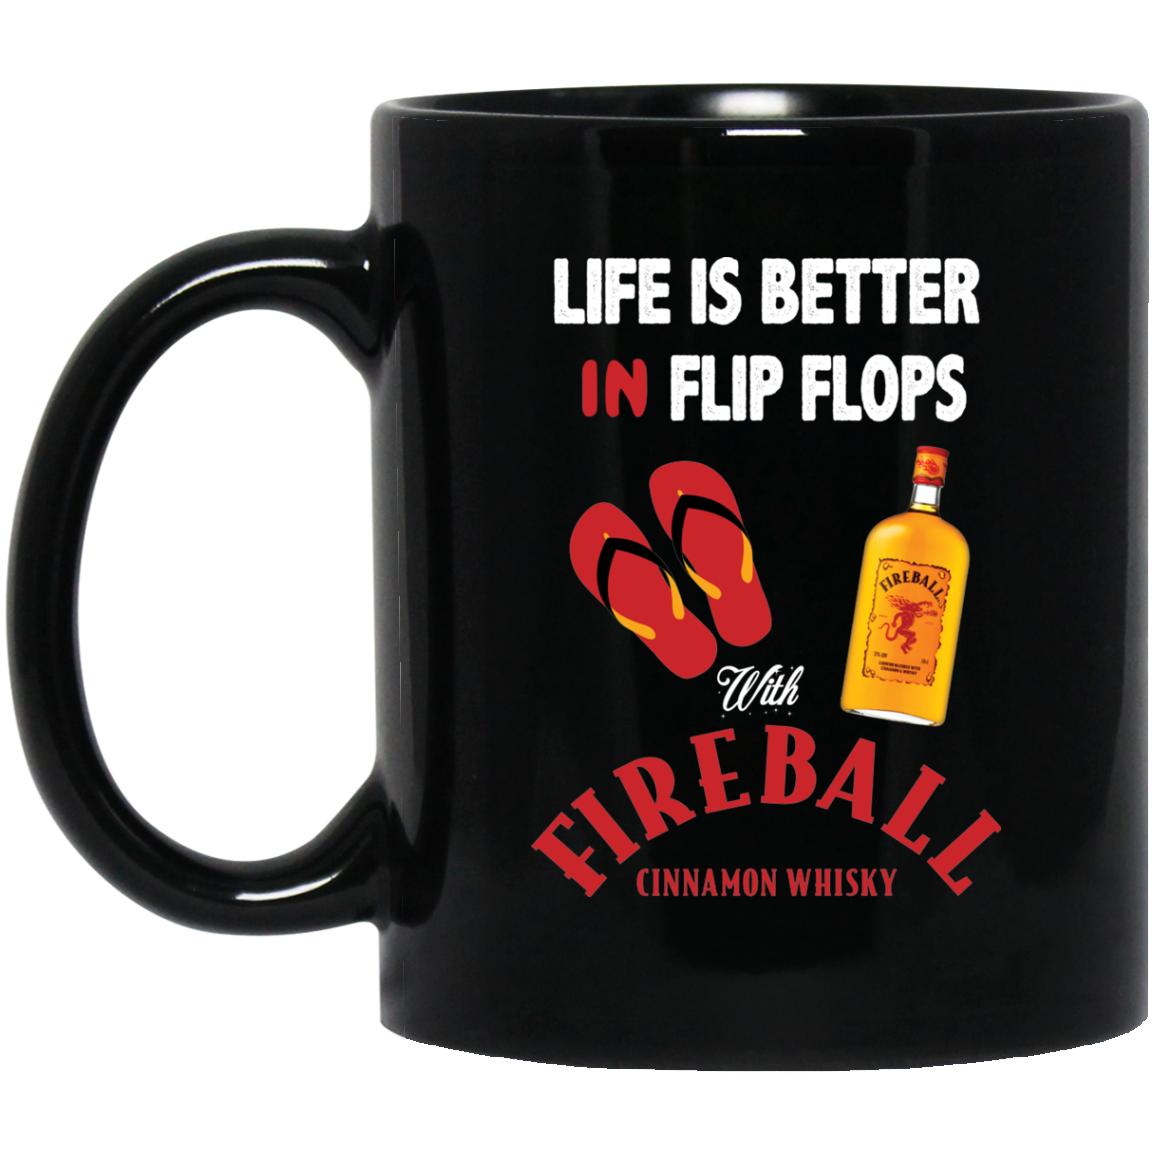 Life Is Better In Flip Flops With Firebal Mug